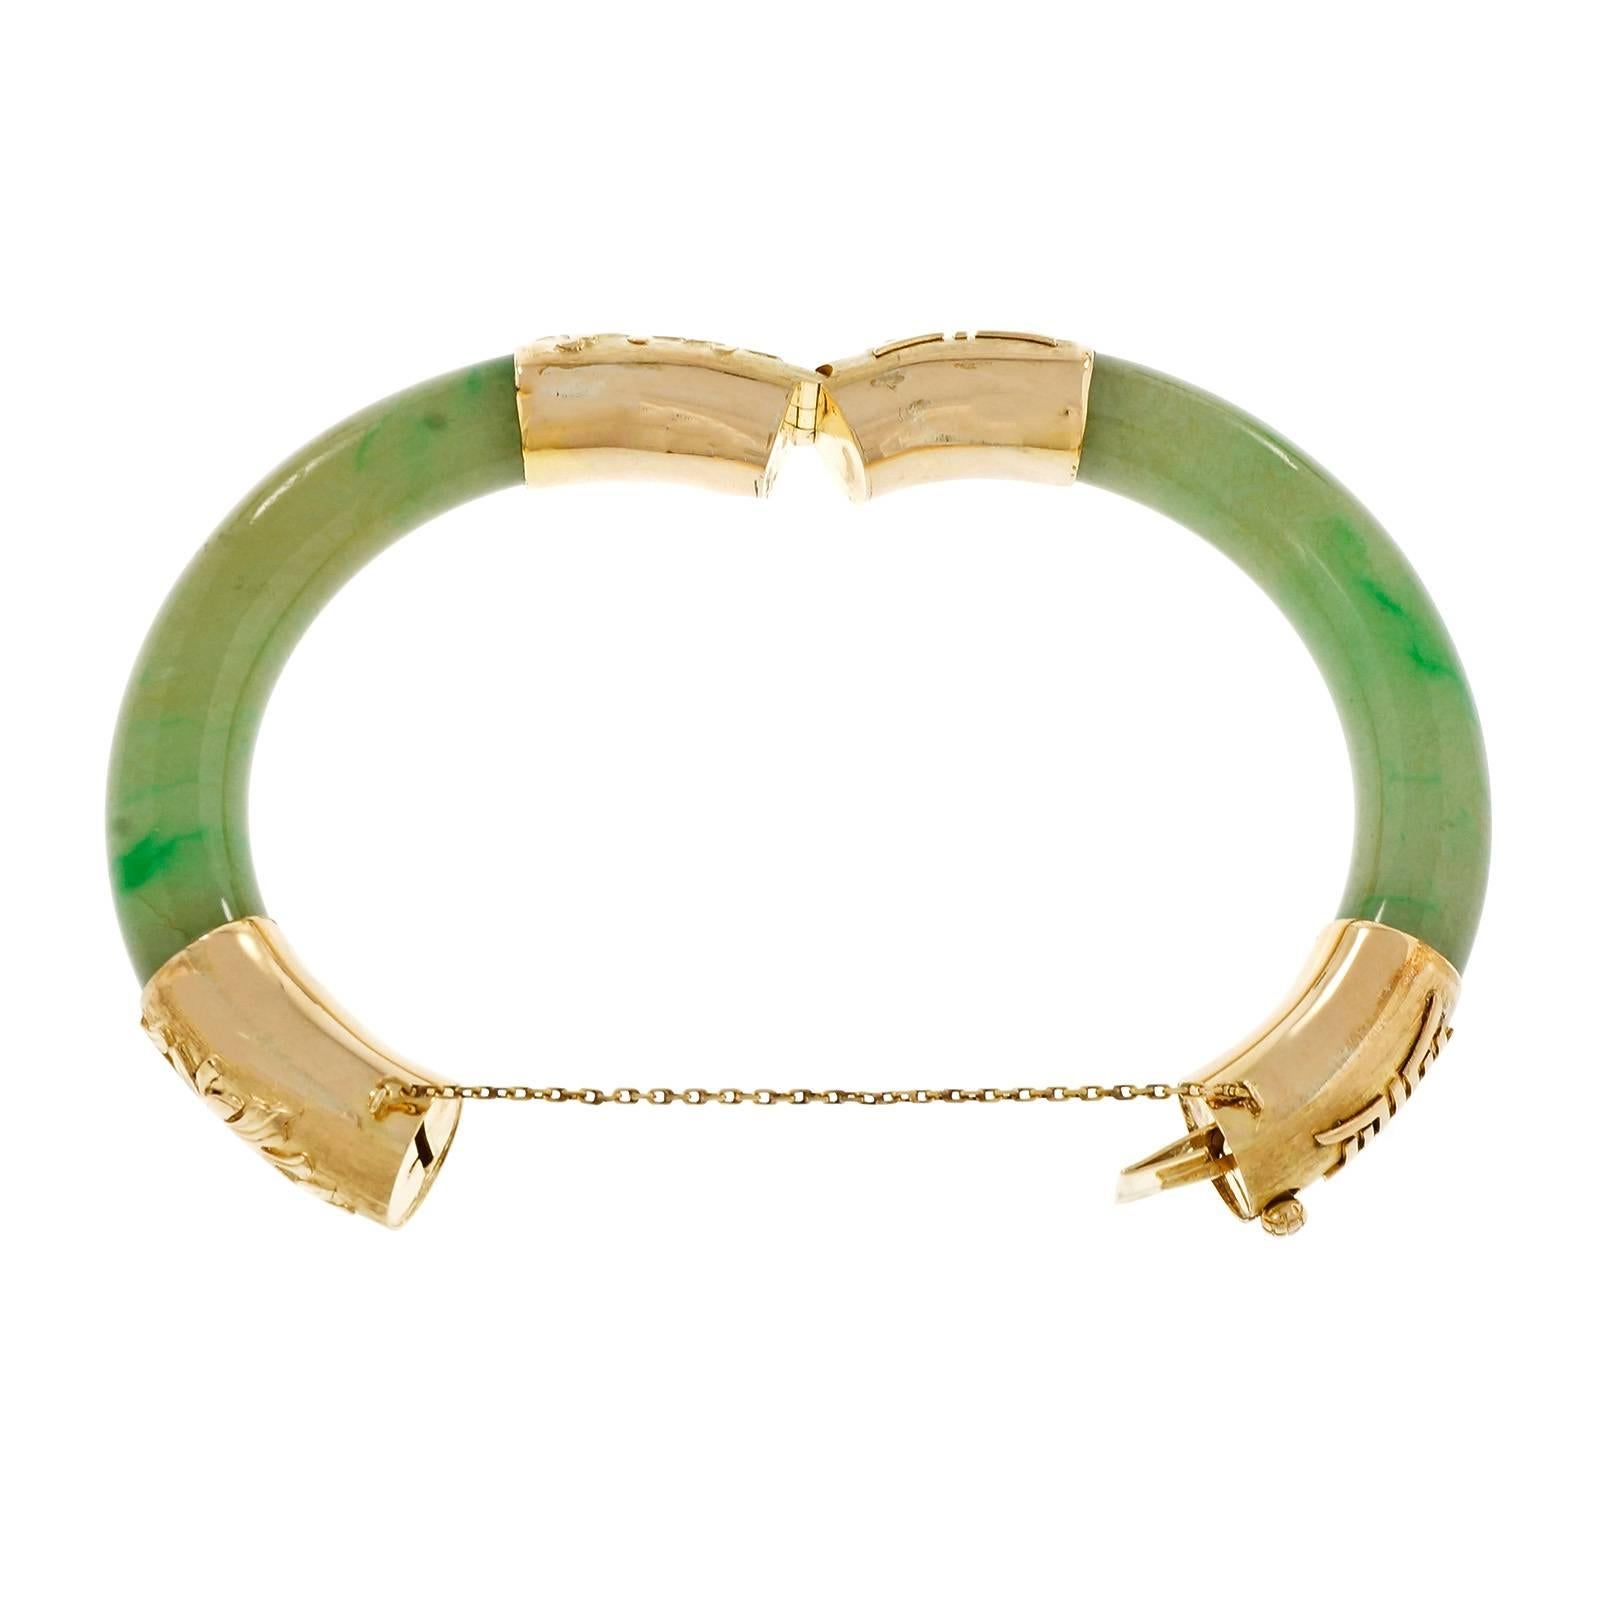 Vintage 11.5mm wide hinged GIA certified natural green Jadeite Jade bangle bracelet, circa 1940. 14k yellow gold detailed hinge caps. Wide translucent Jade sections.

2 Arc shaped mottled green segment of translucent Jadeite Jade, 77.34 x 11.52mm,